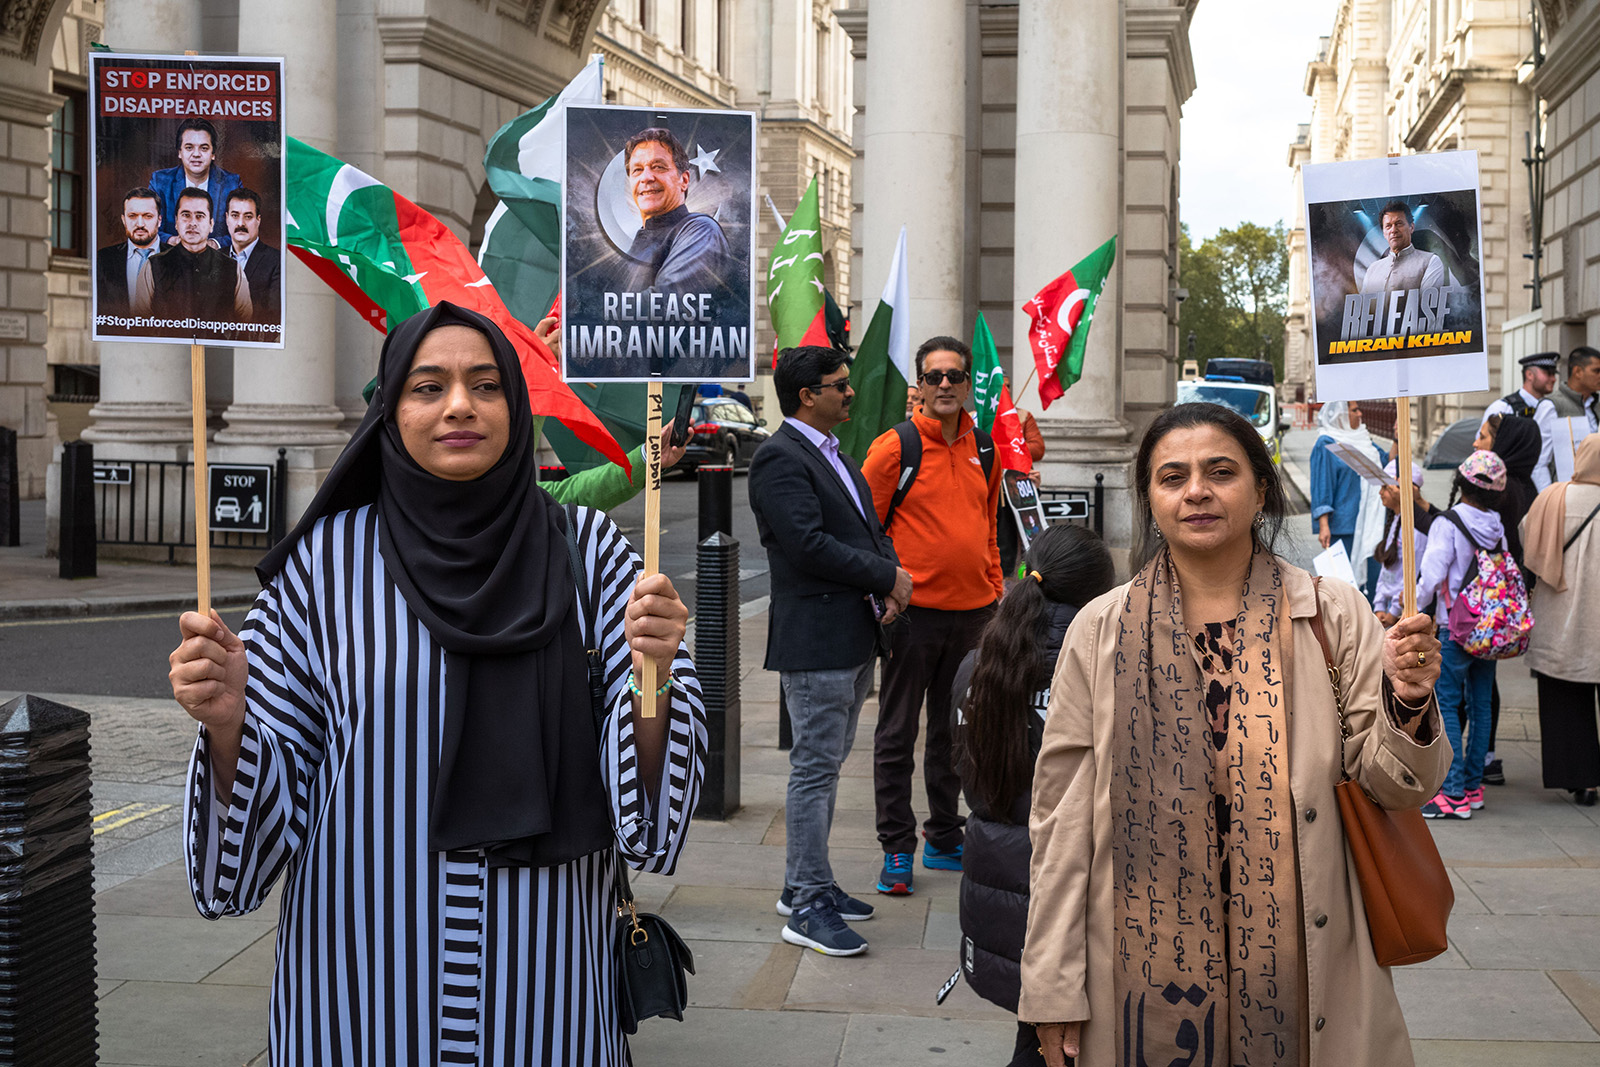 Two Pakistani women protest in London against Imran Khan's jail sentencing in Pakistan